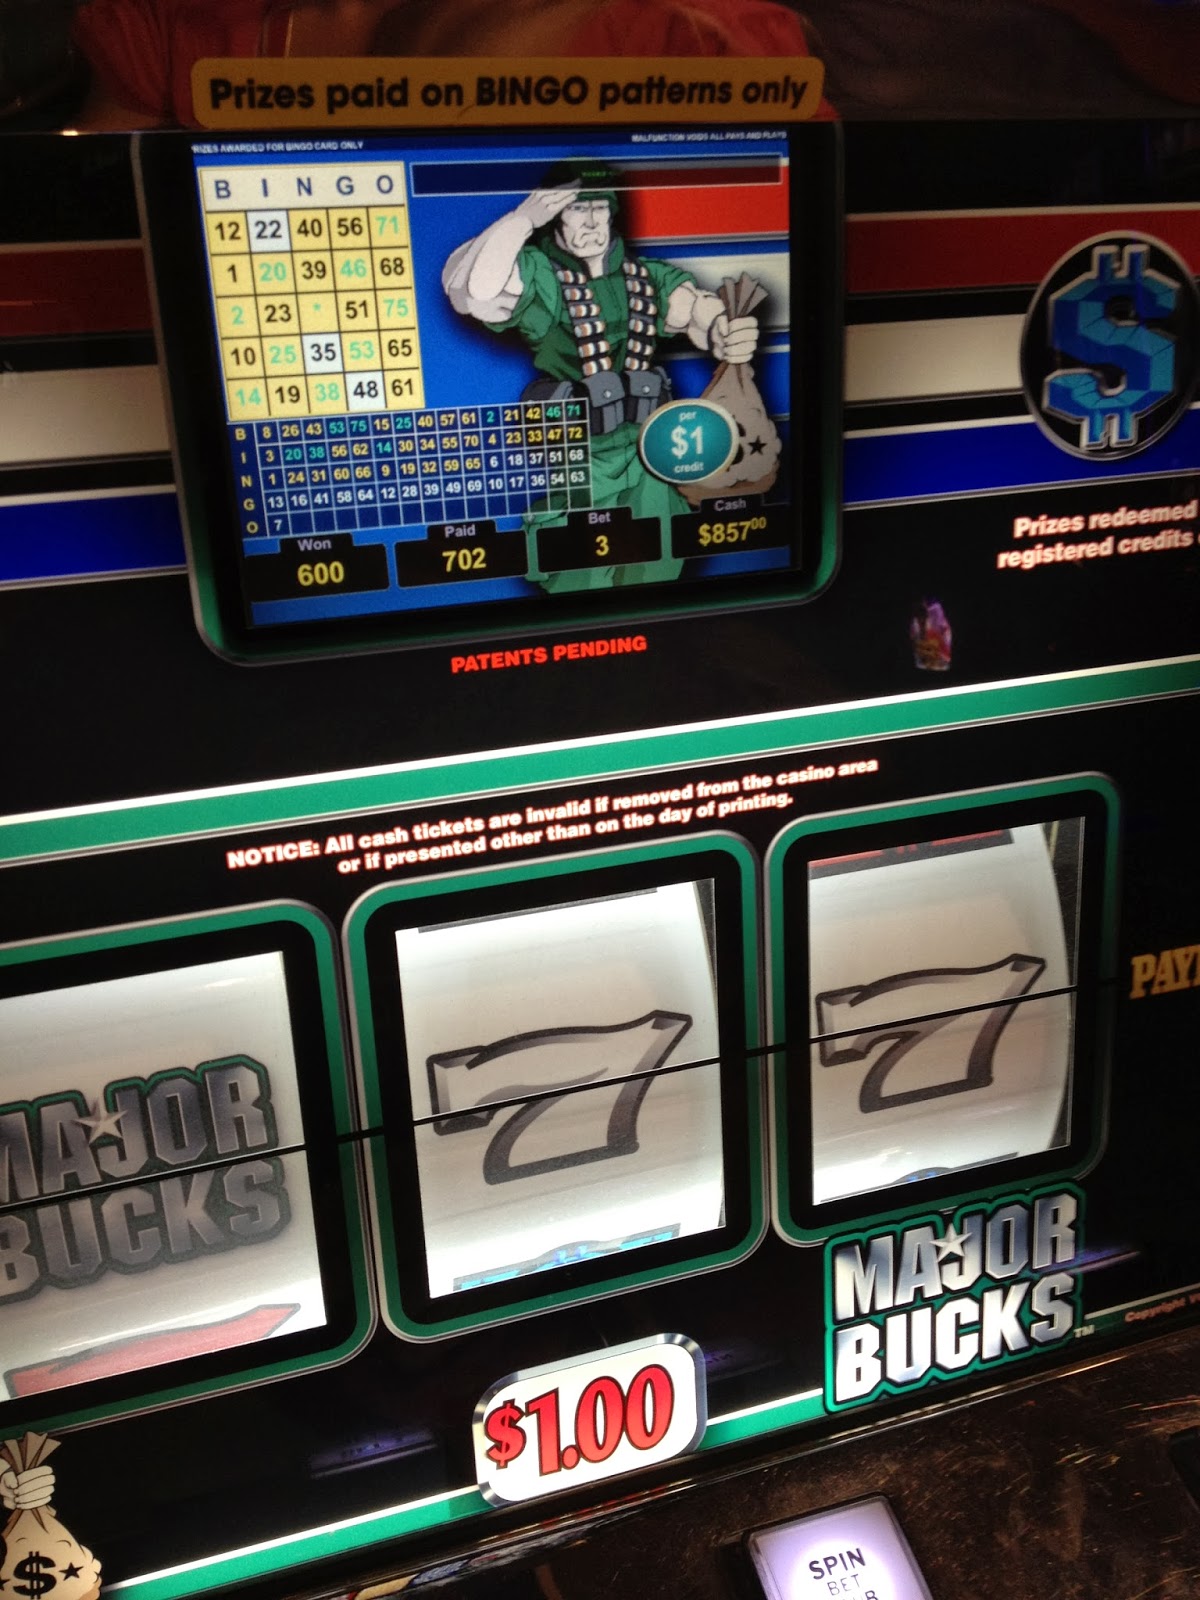 Youtube videos of slot machine jackpots